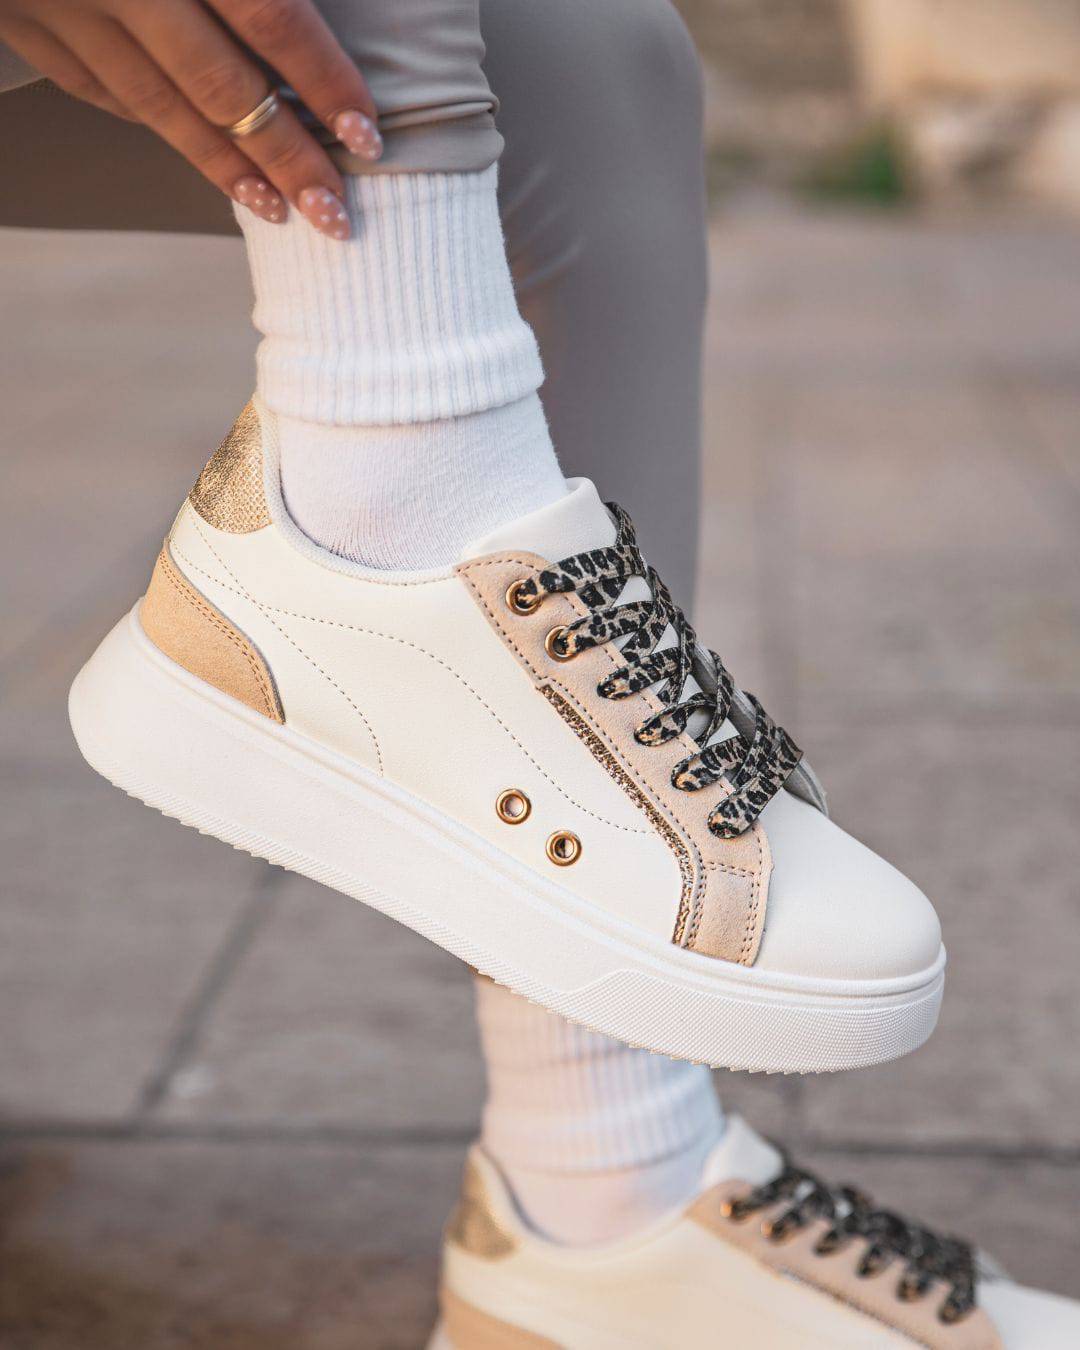 Damen-Sneaker in Weiß mit Leopardenmuster-Schnürsenkeln - Molly - Casualmode.de